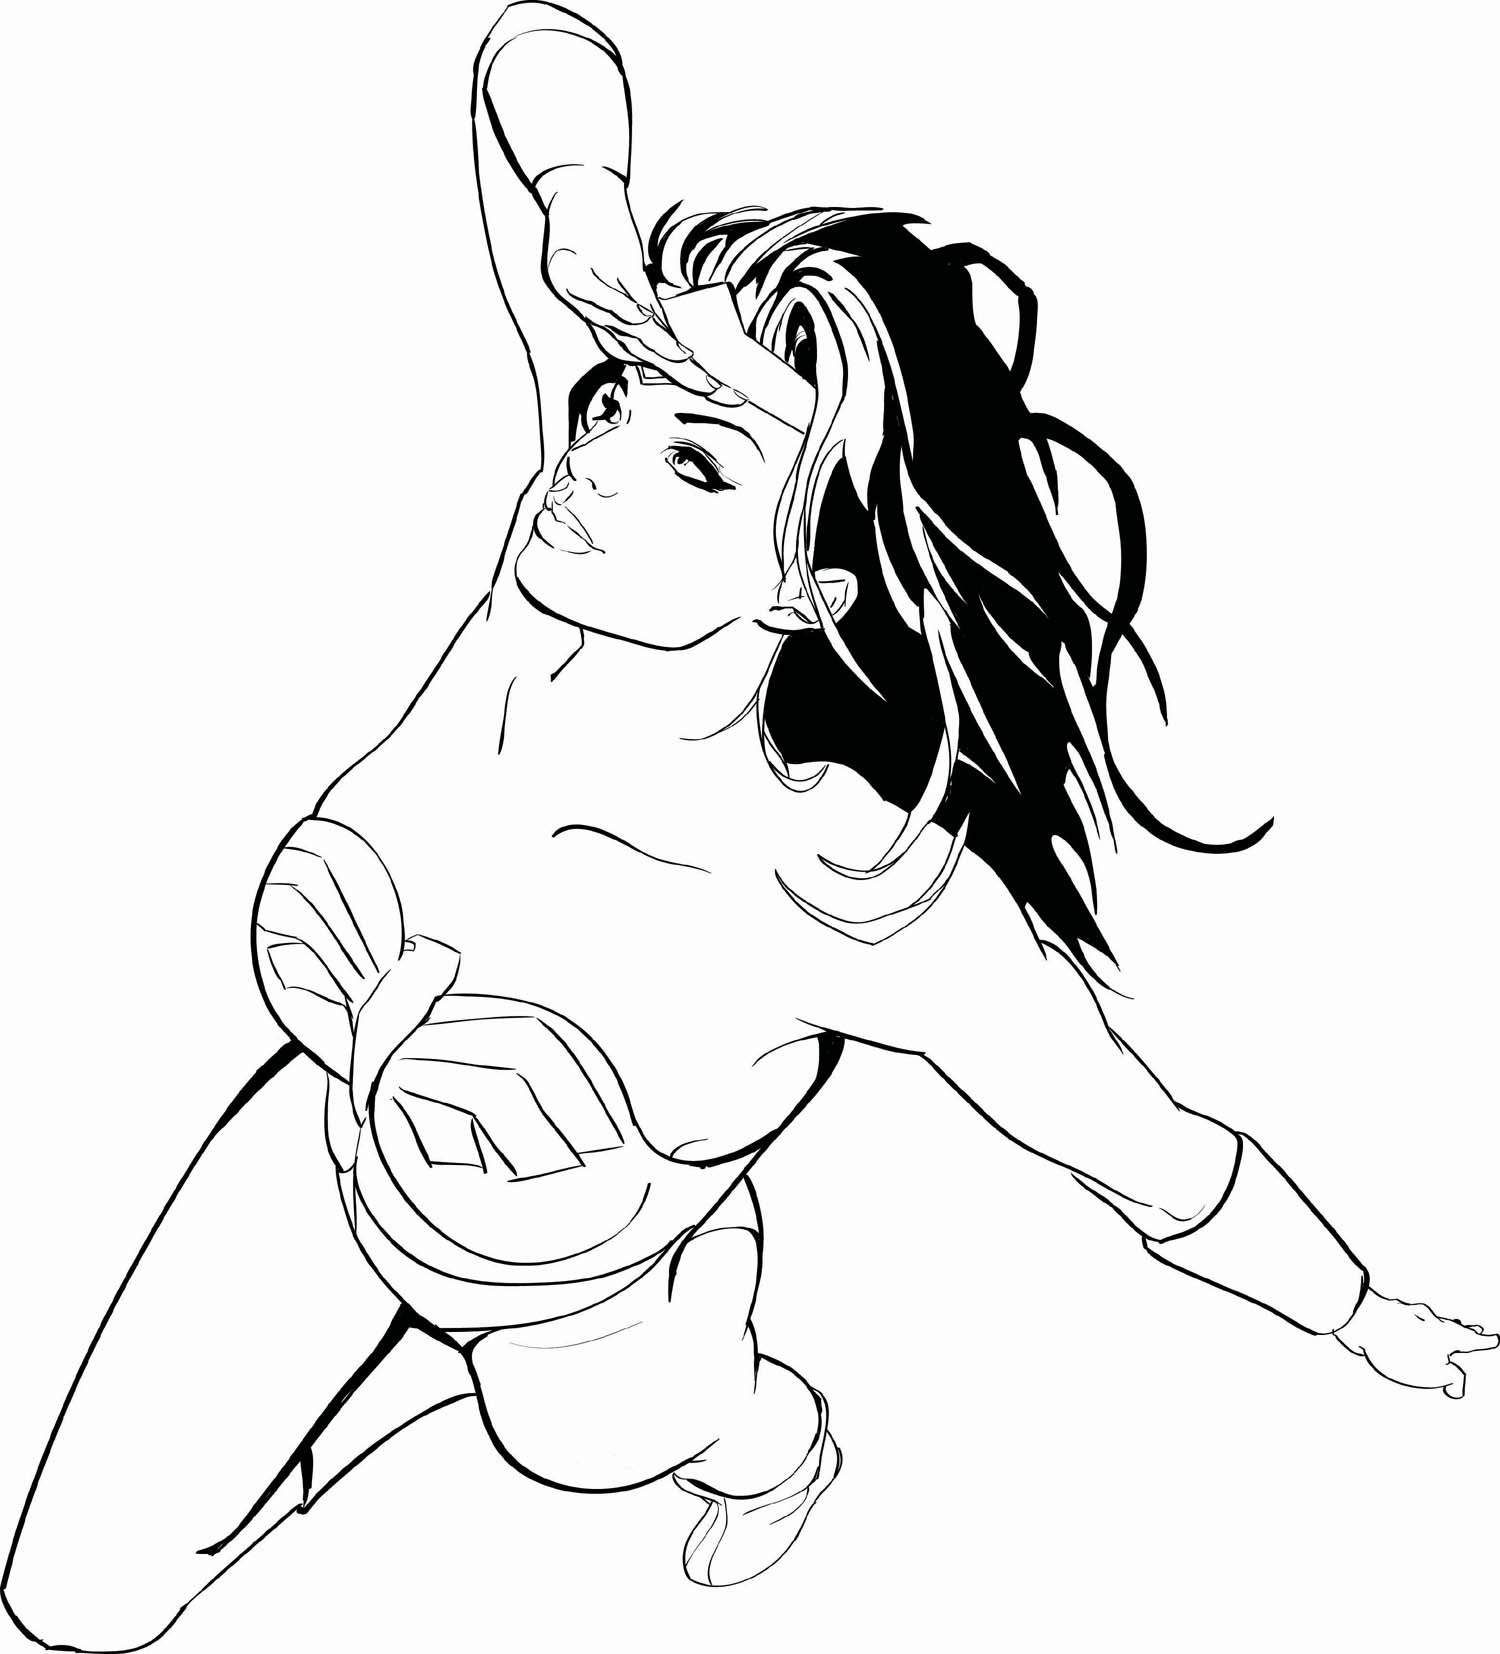 Coloring page: Wonder Woman (Superheroes) #74614 - Free Printable Coloring Pages